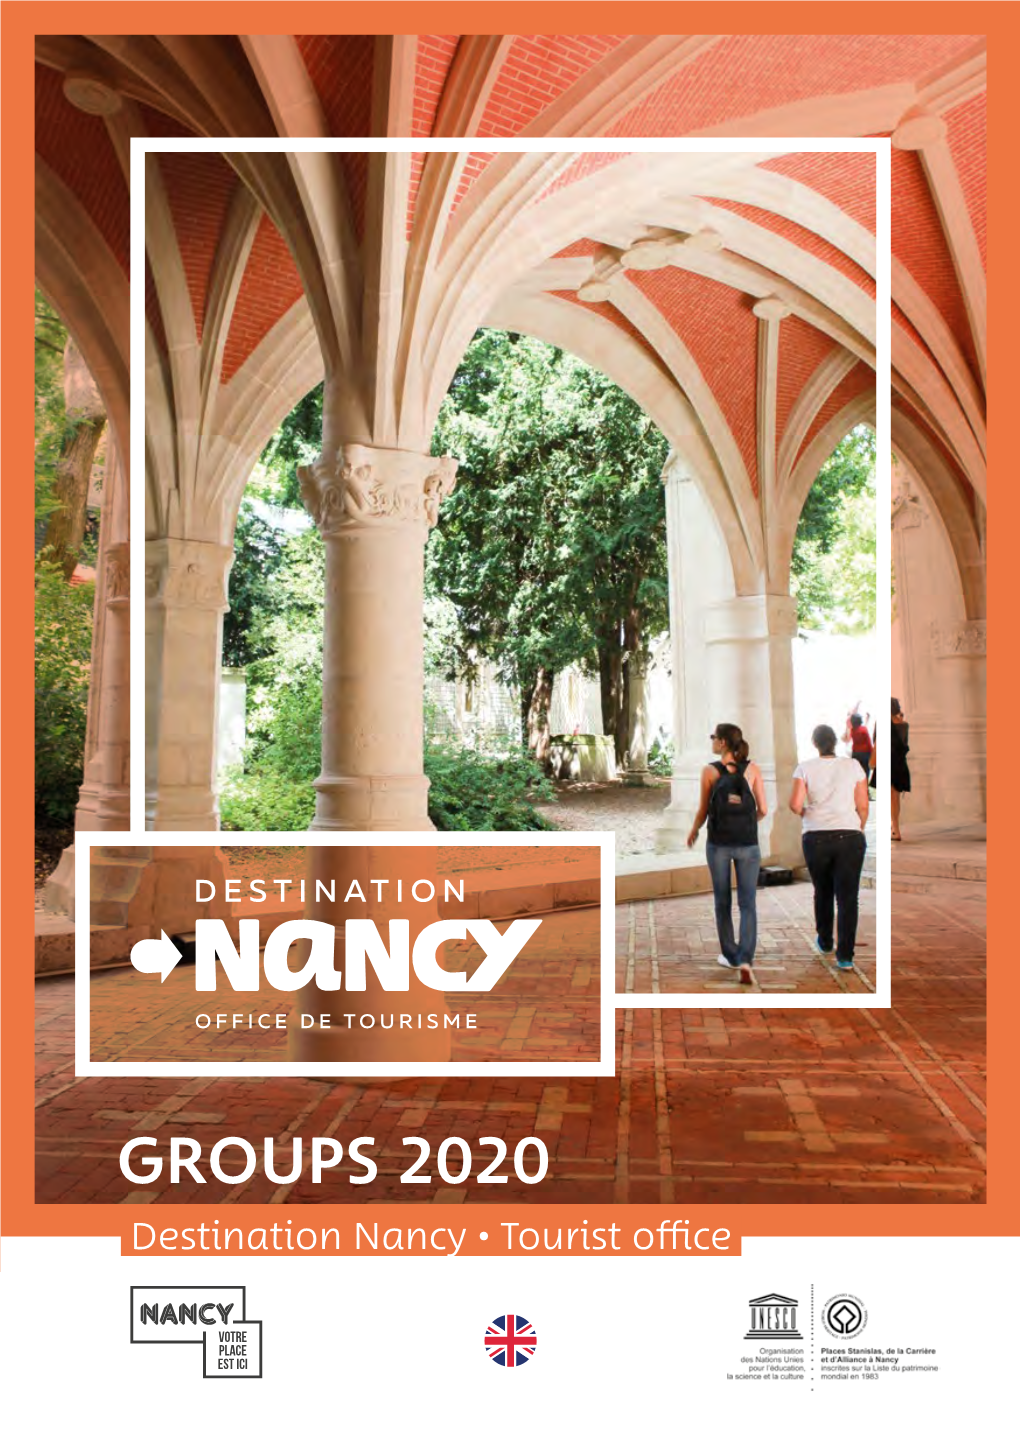 GROUPS 2020 Destination Nancy • Tourist Office 2 GROUPS 2020 GROUPS